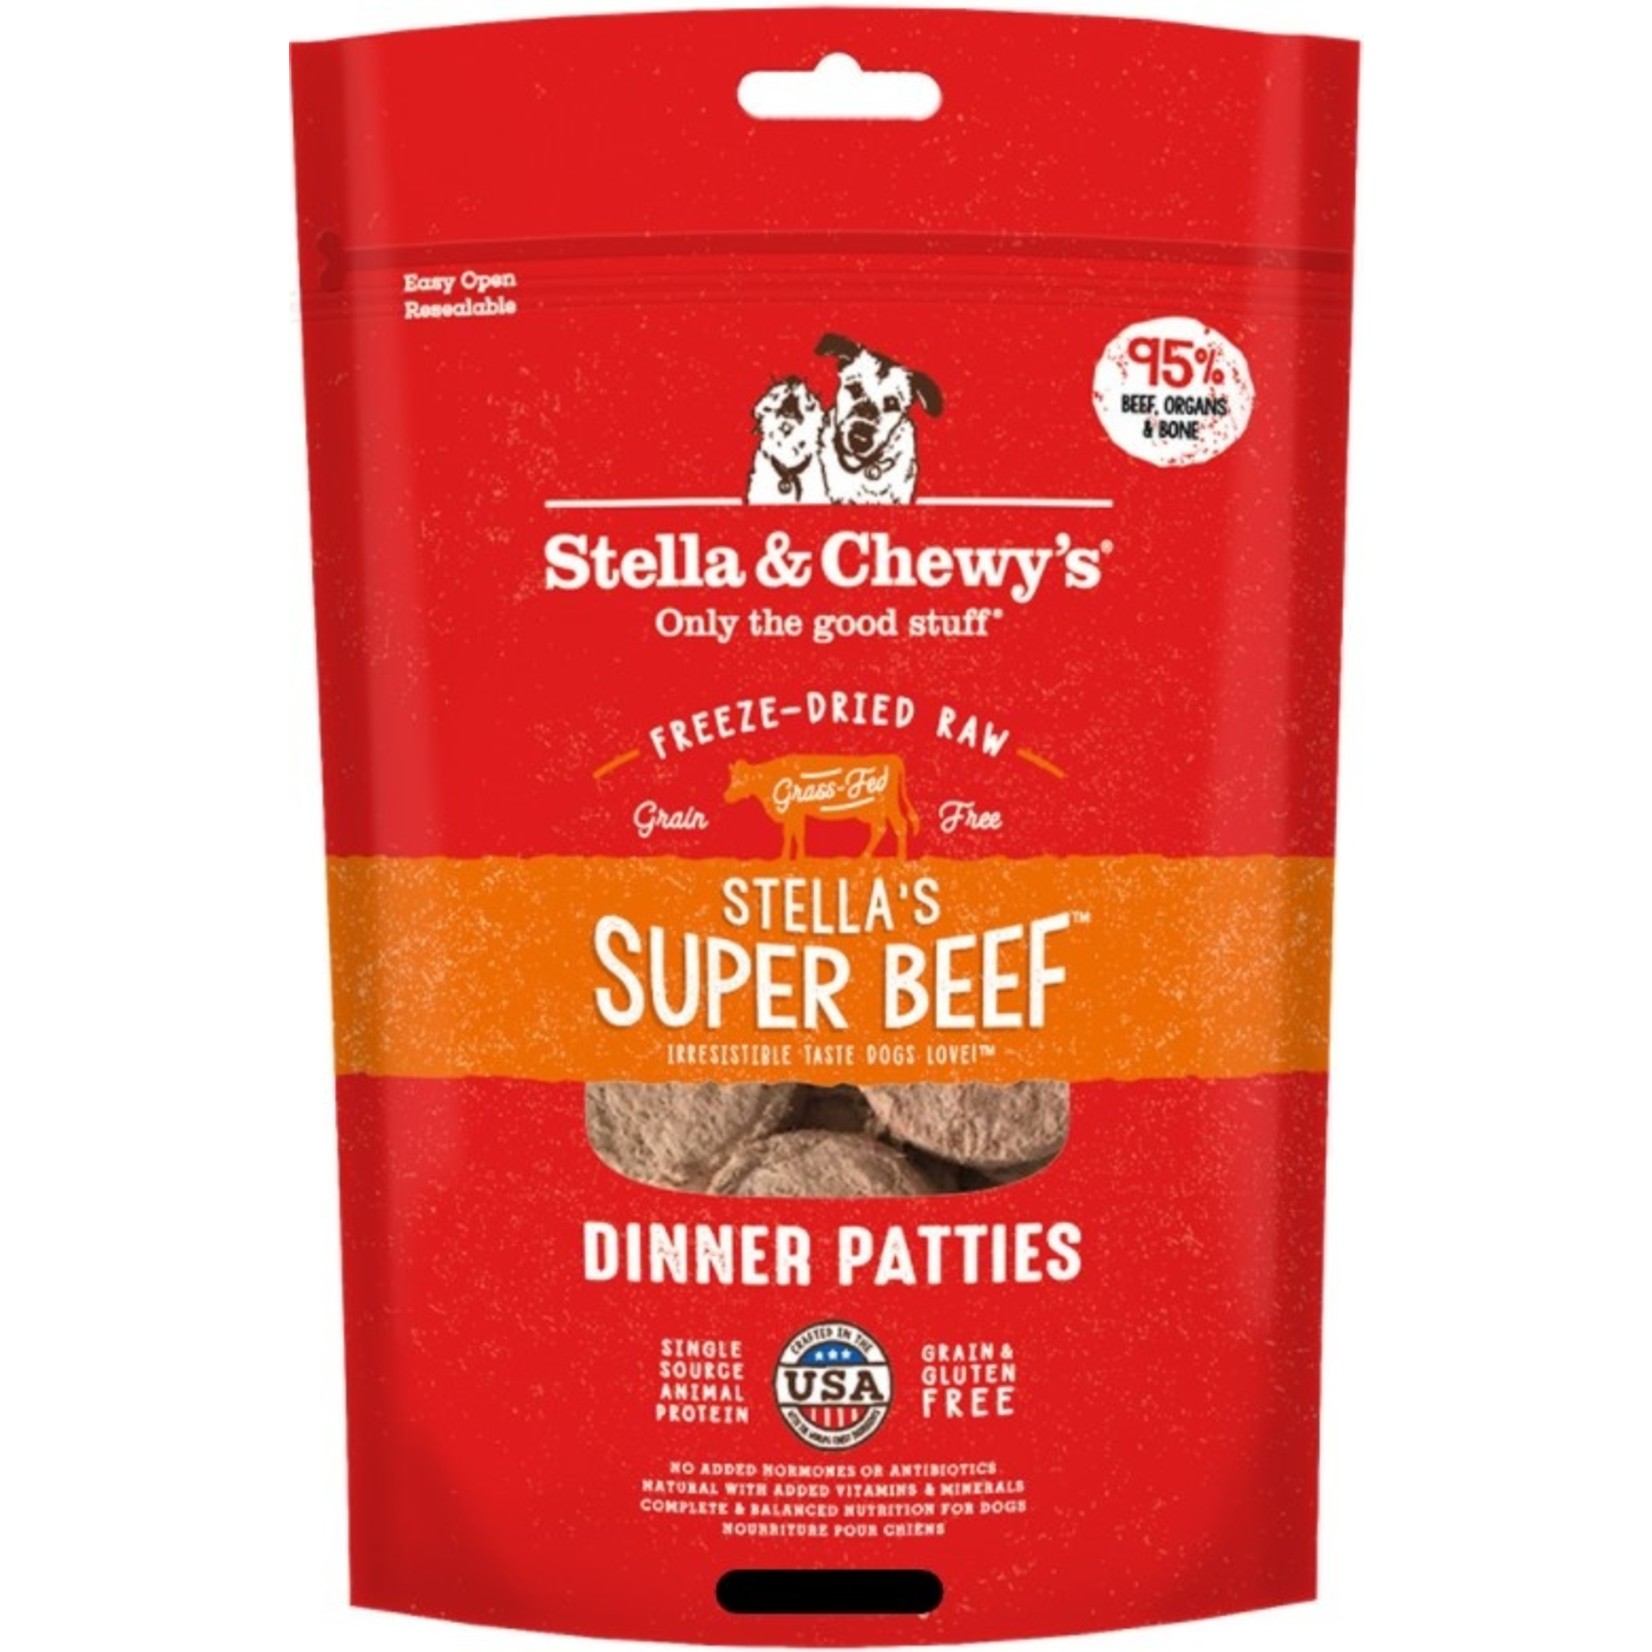 STELLA CHEWY STELLA & CHEWY'S. FREEZE-DRIED RAW. Gluten & Grain Free Stella's Super Beef. Dinner Patties 25OZ